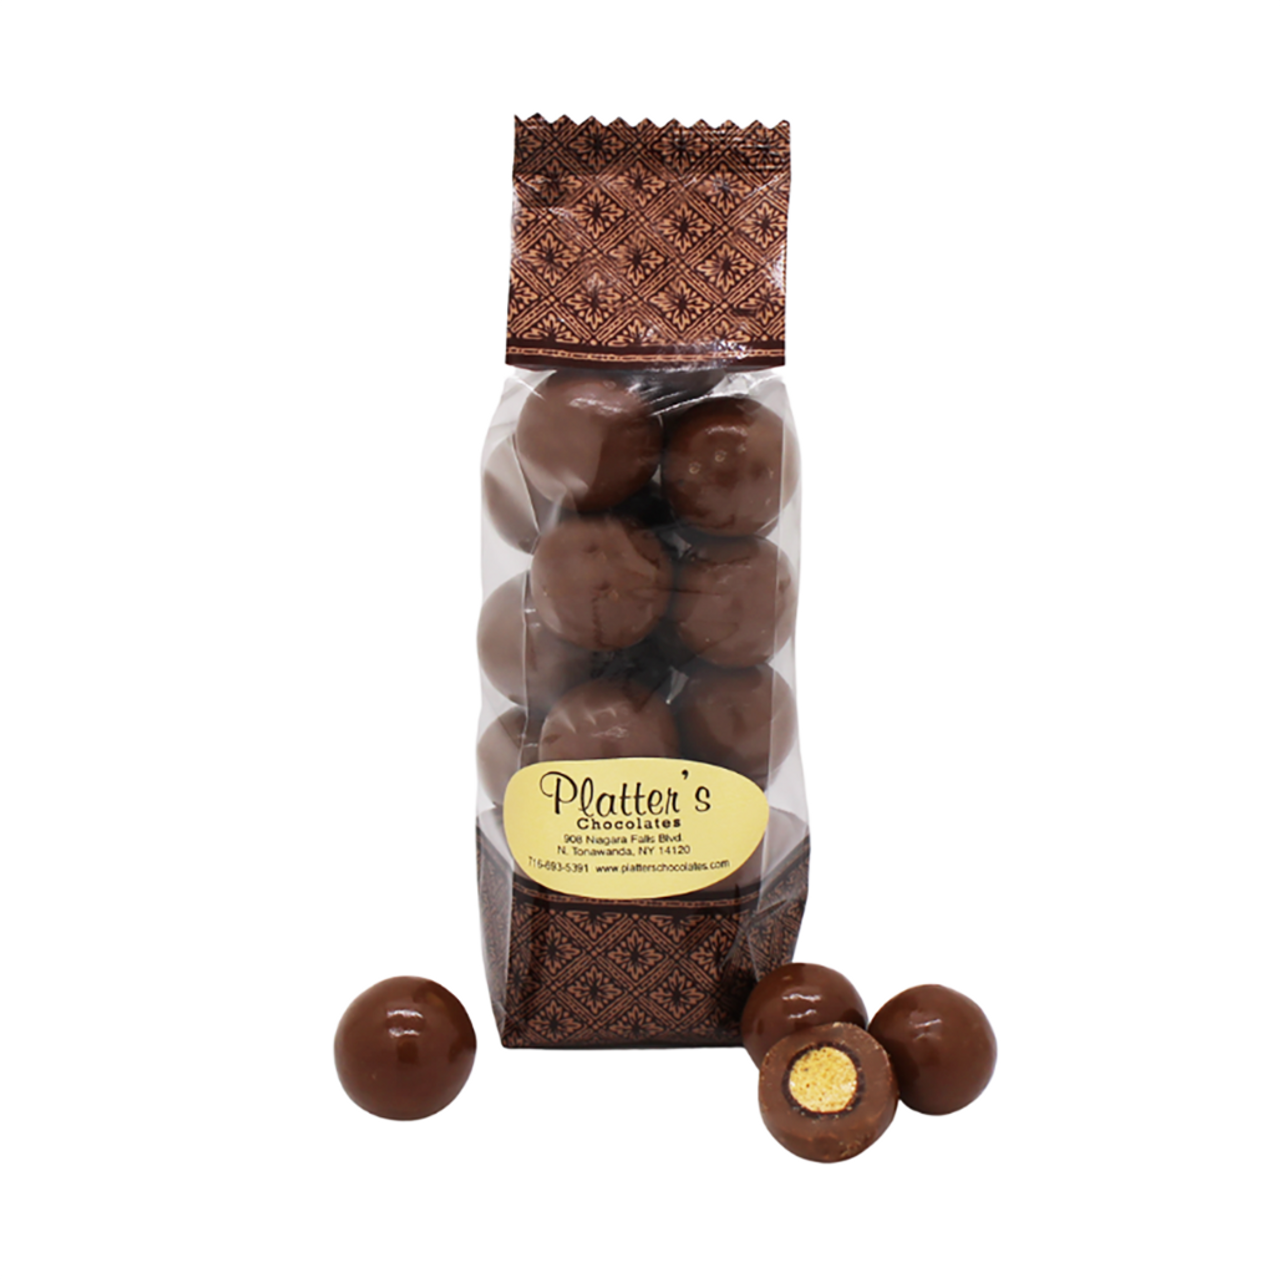 Malt Balls made with Platter's Chocolates Milk Chocolate